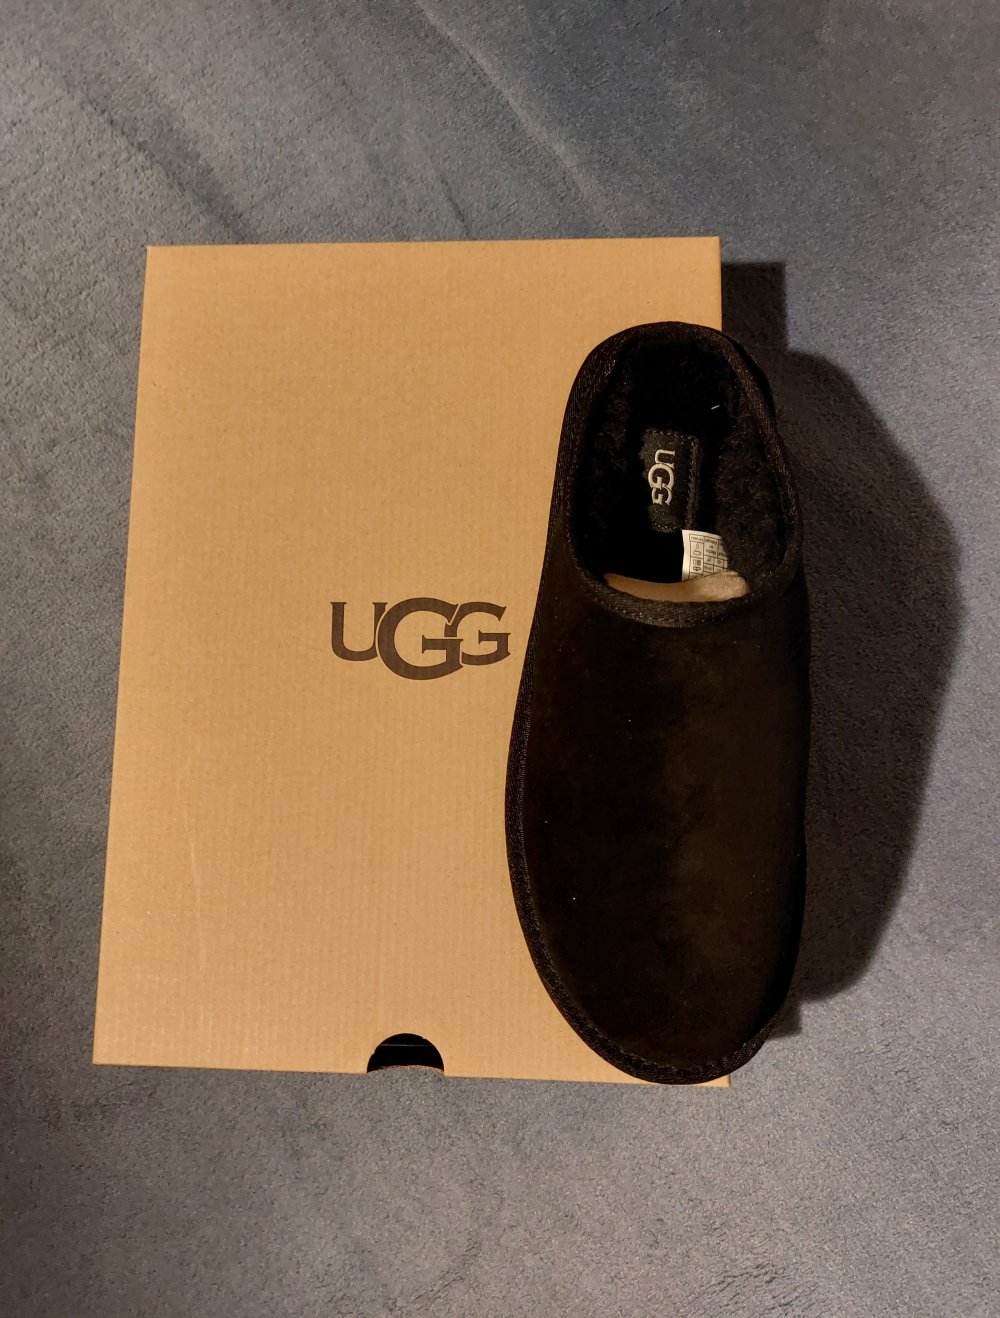 Original UGG Classic Slip-On / Pantoffeln / Hausschuhe, Farbe: Black, Gr. 42